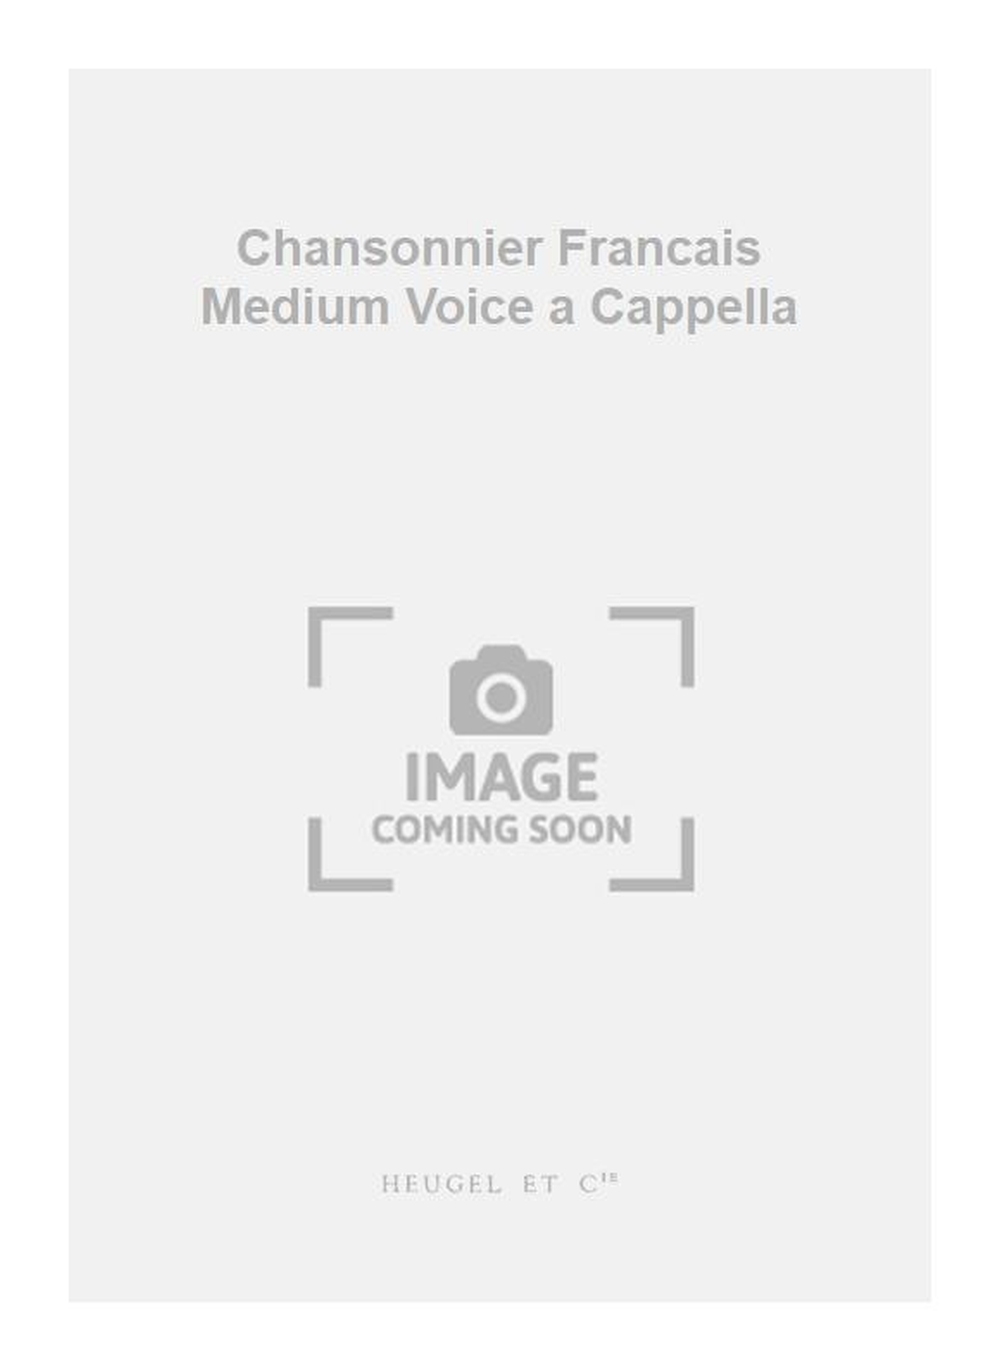 Joseph Canteloube: Chansonnier Francais Medium Voice a Cappella